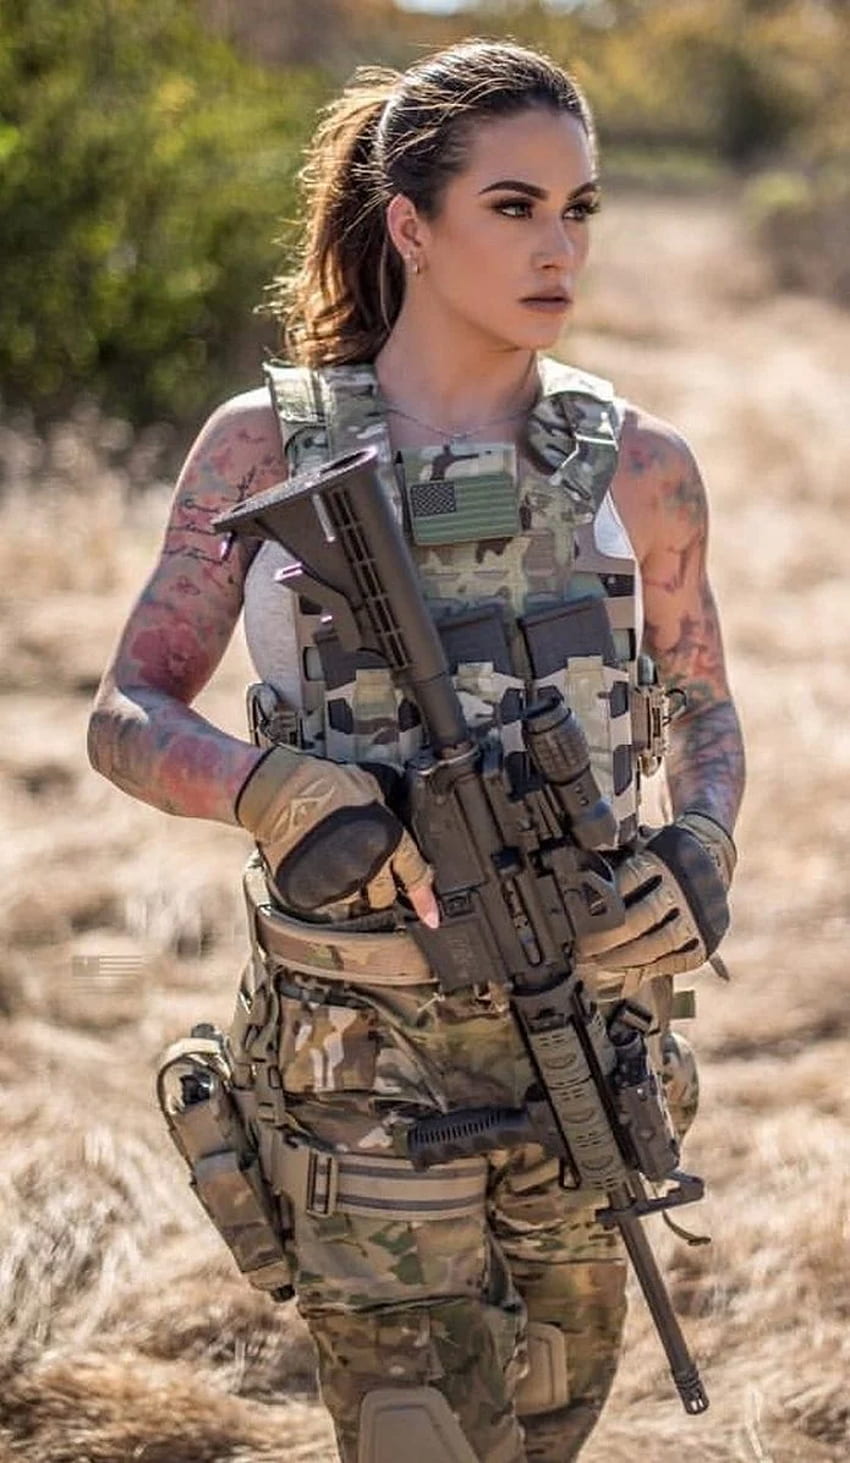 Hot Military Babes - Girls & Guns - Filles avec des armes Fond d'écran de téléphone HD